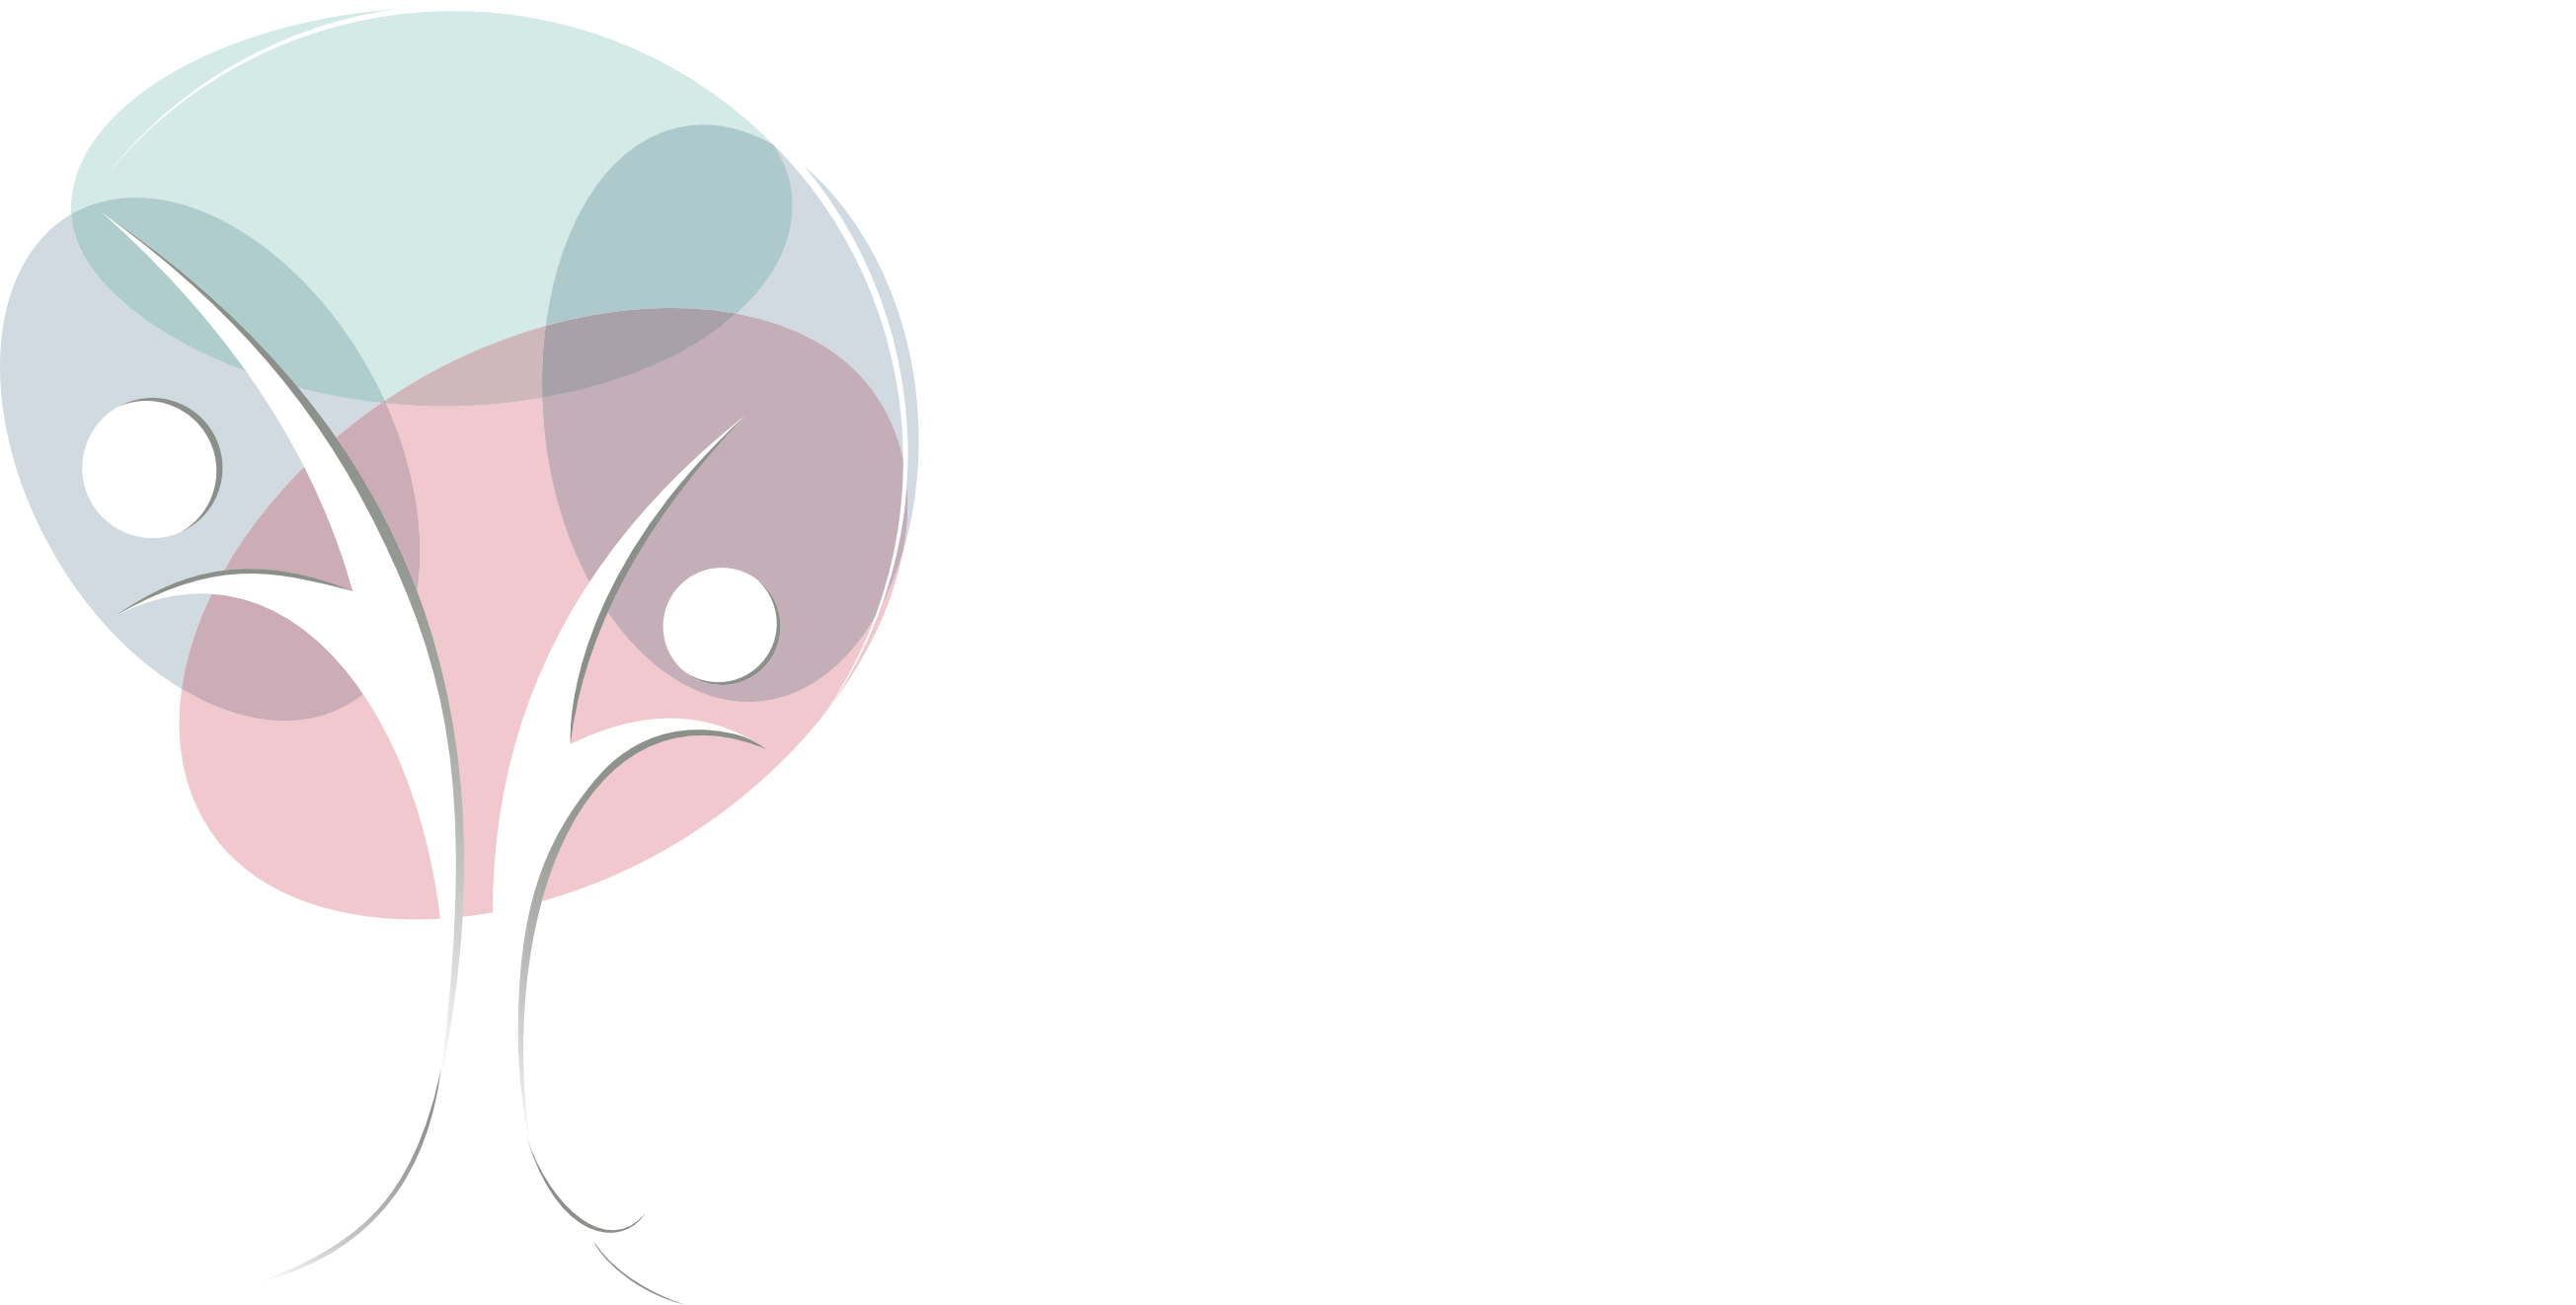 Mentalis logo